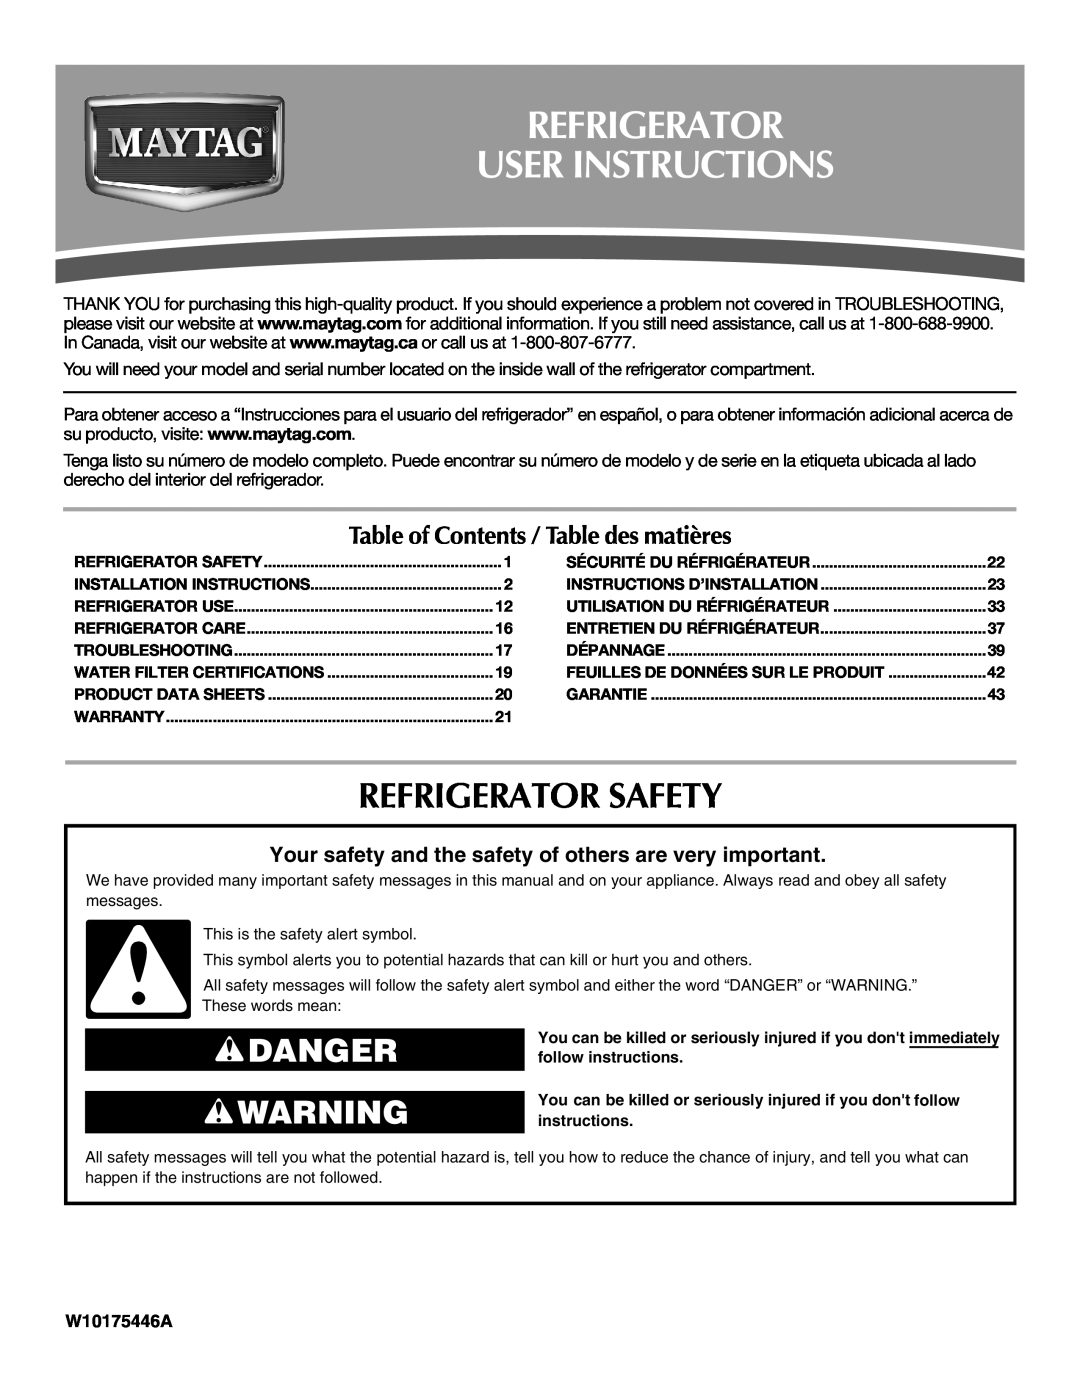 Maytag MBL2556KES installation instructions Refrigerator User Instructions, Refrigerator Safety, Danger, W10175446A 